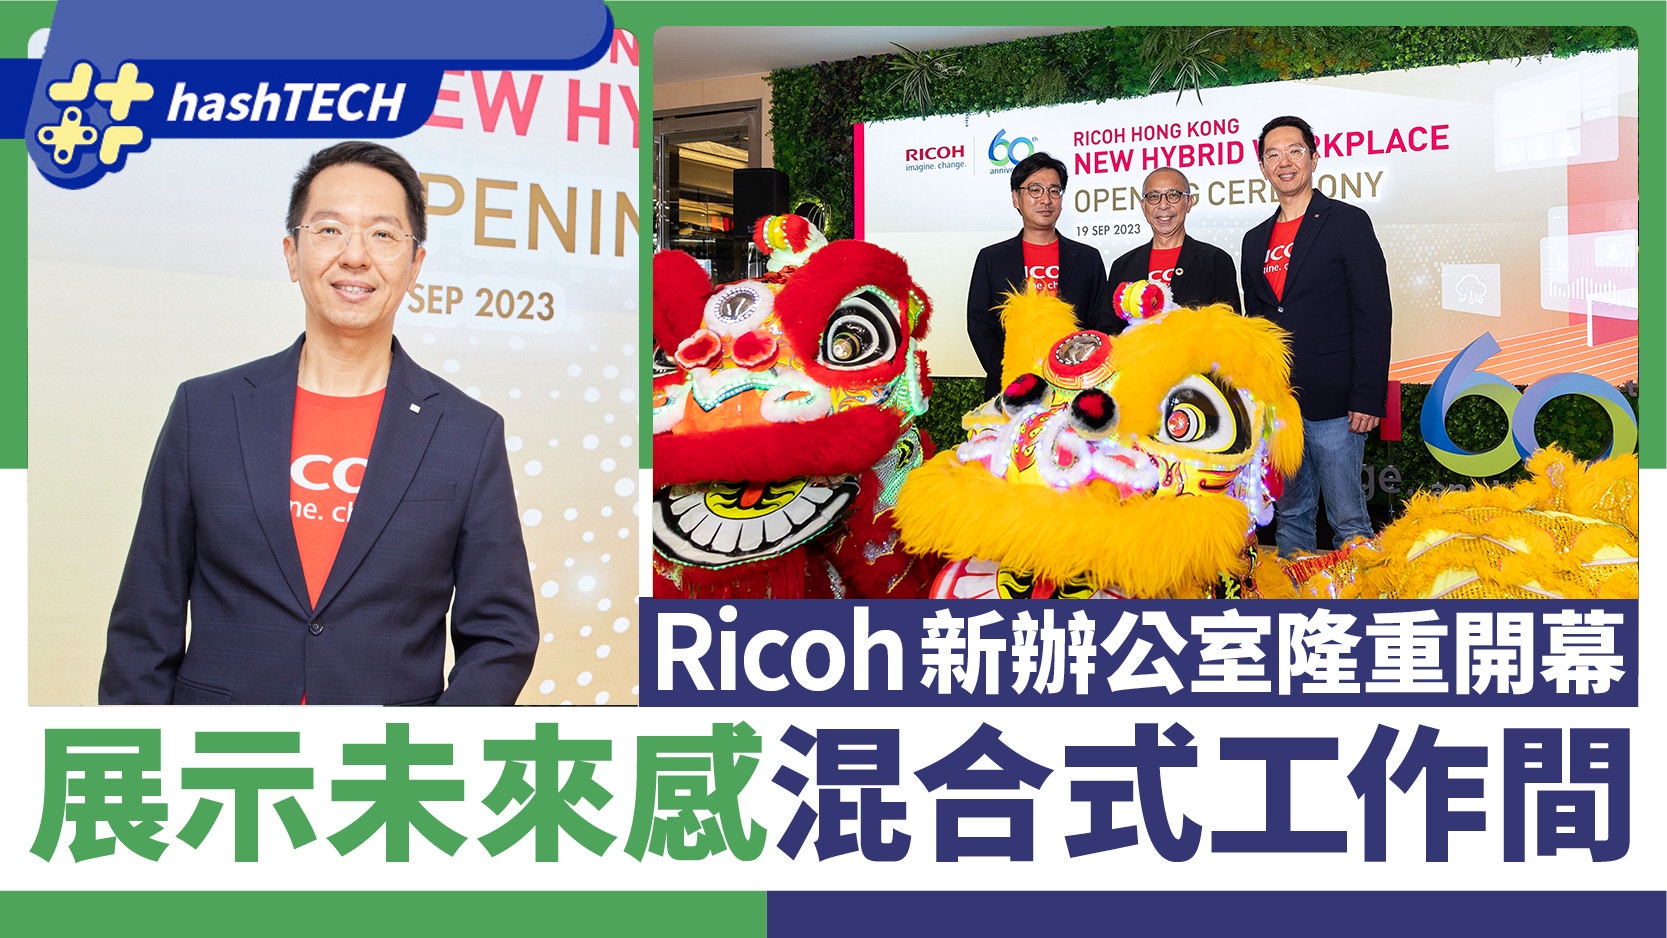 Ricoh香港60周年智能混合工作間開幕、引領未來混合工作模式潮流